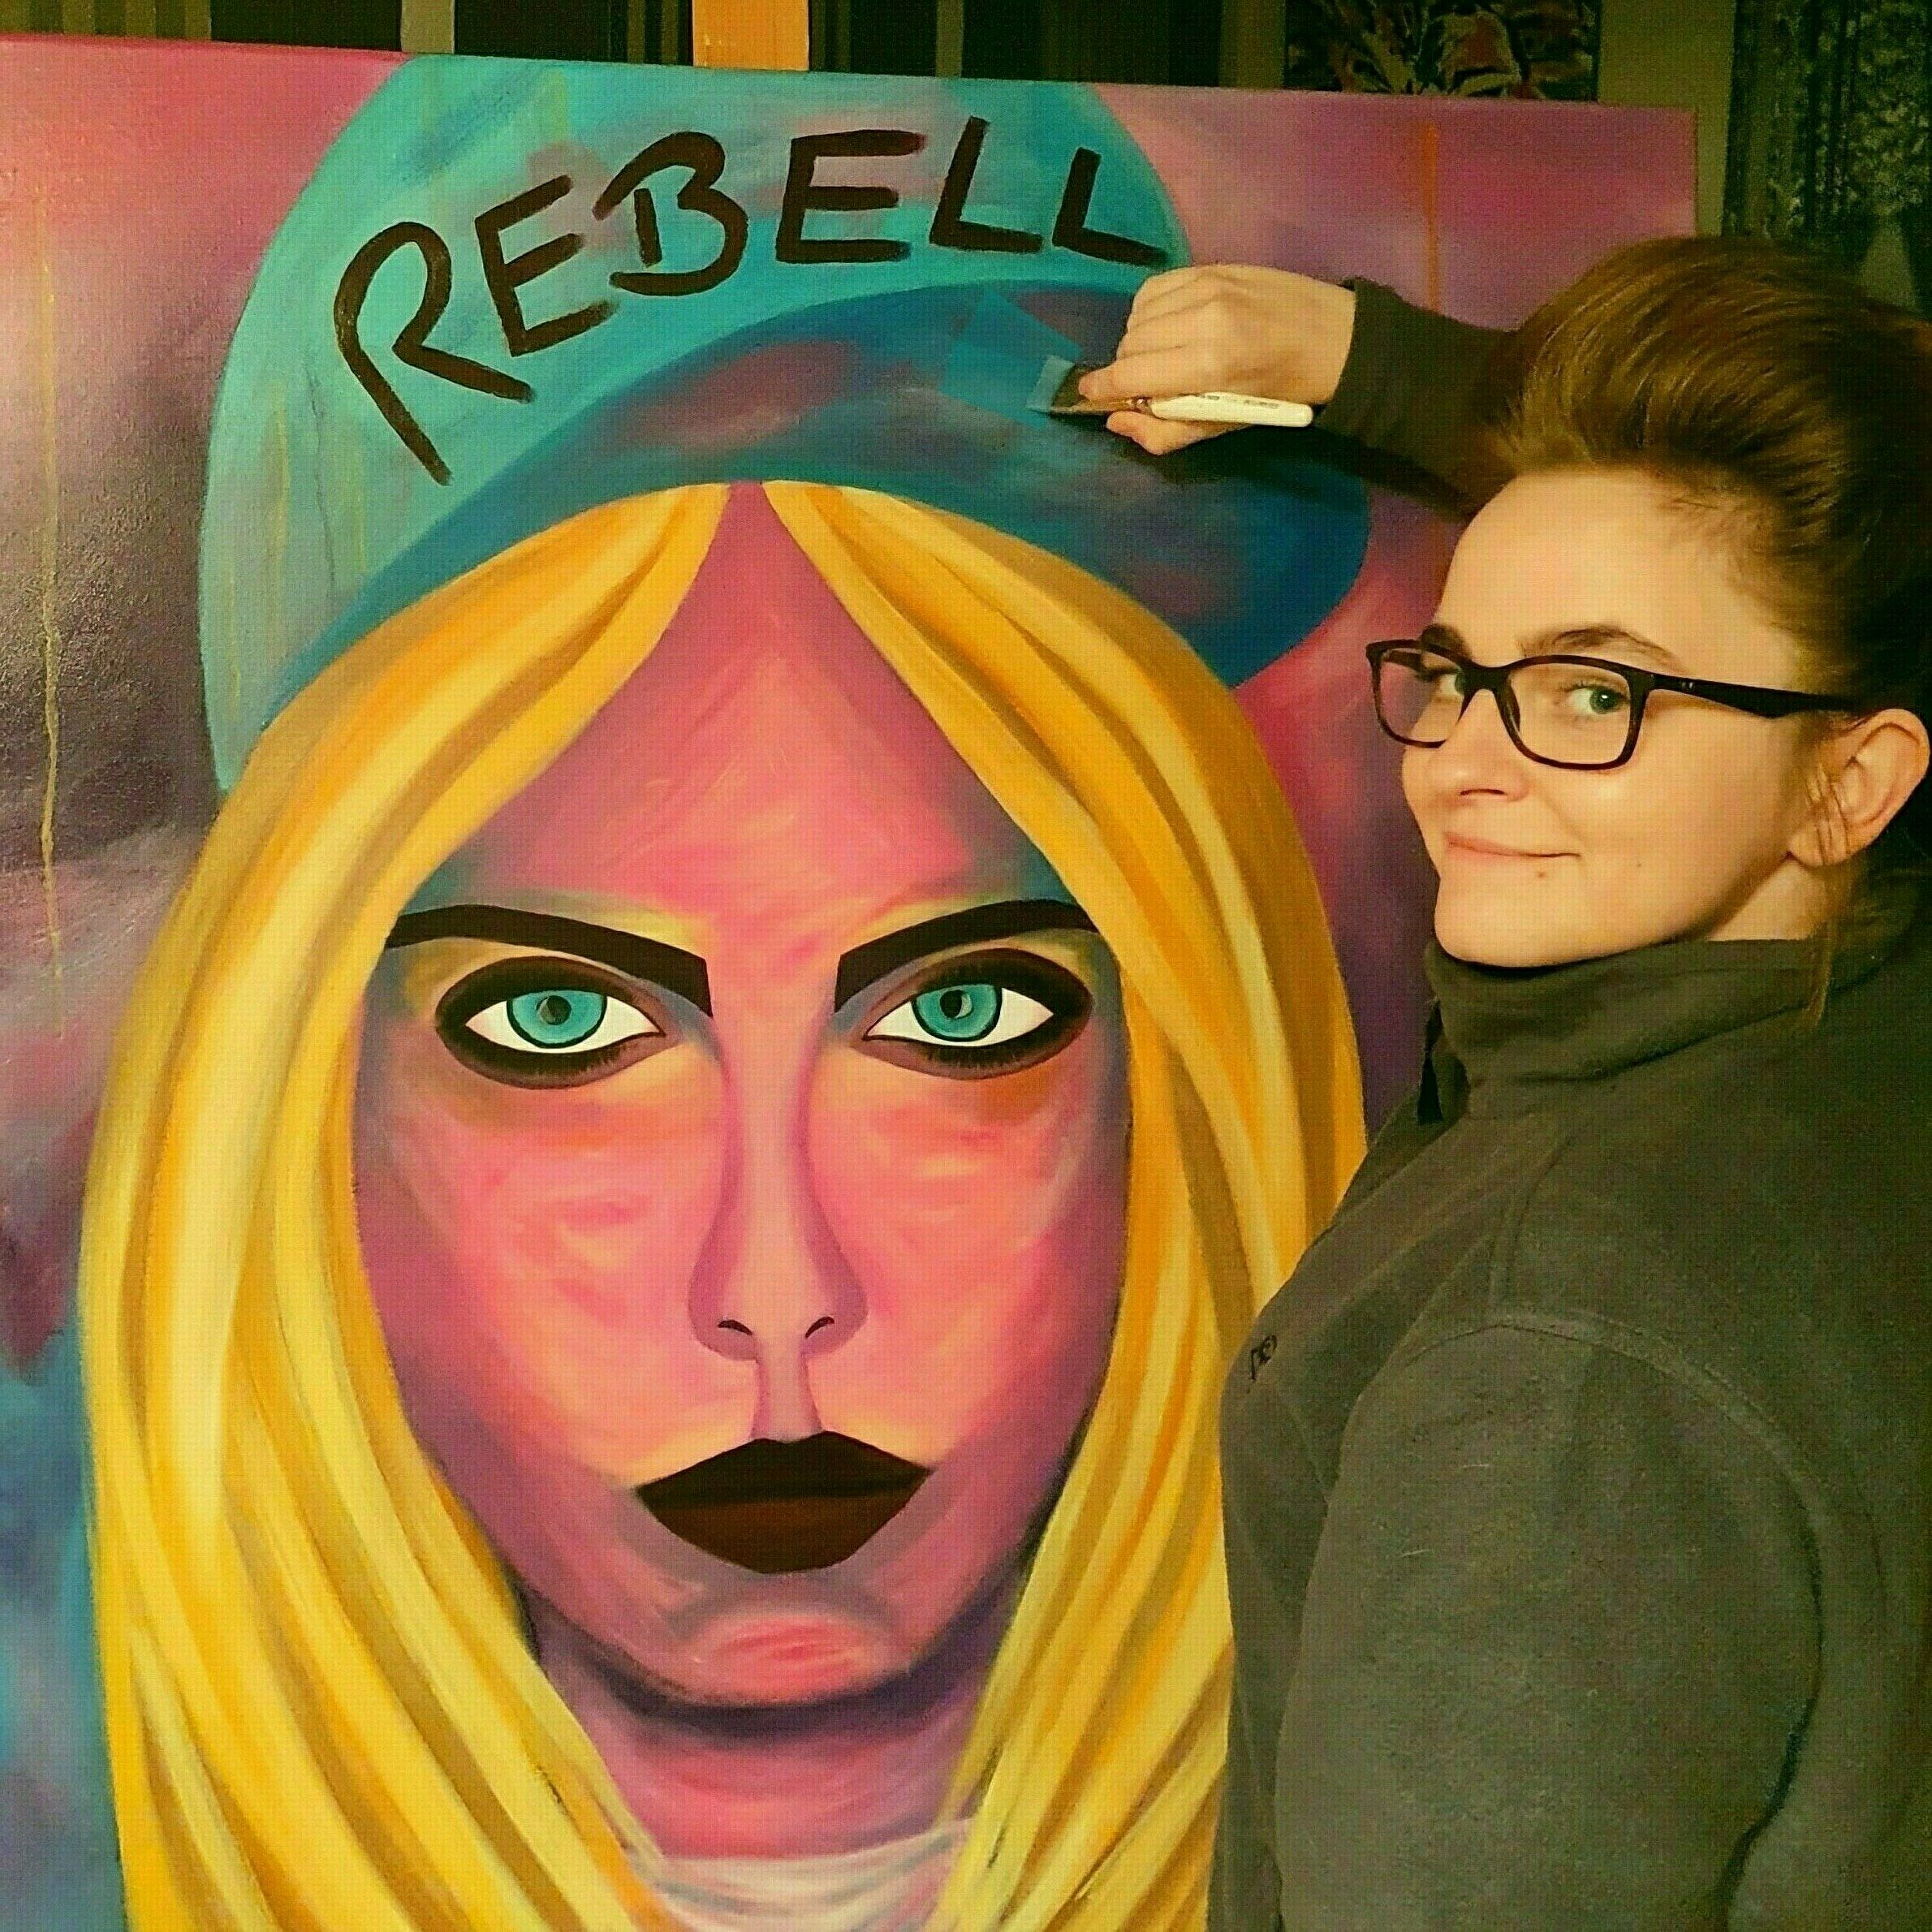 Picture "Rebel" (2020)